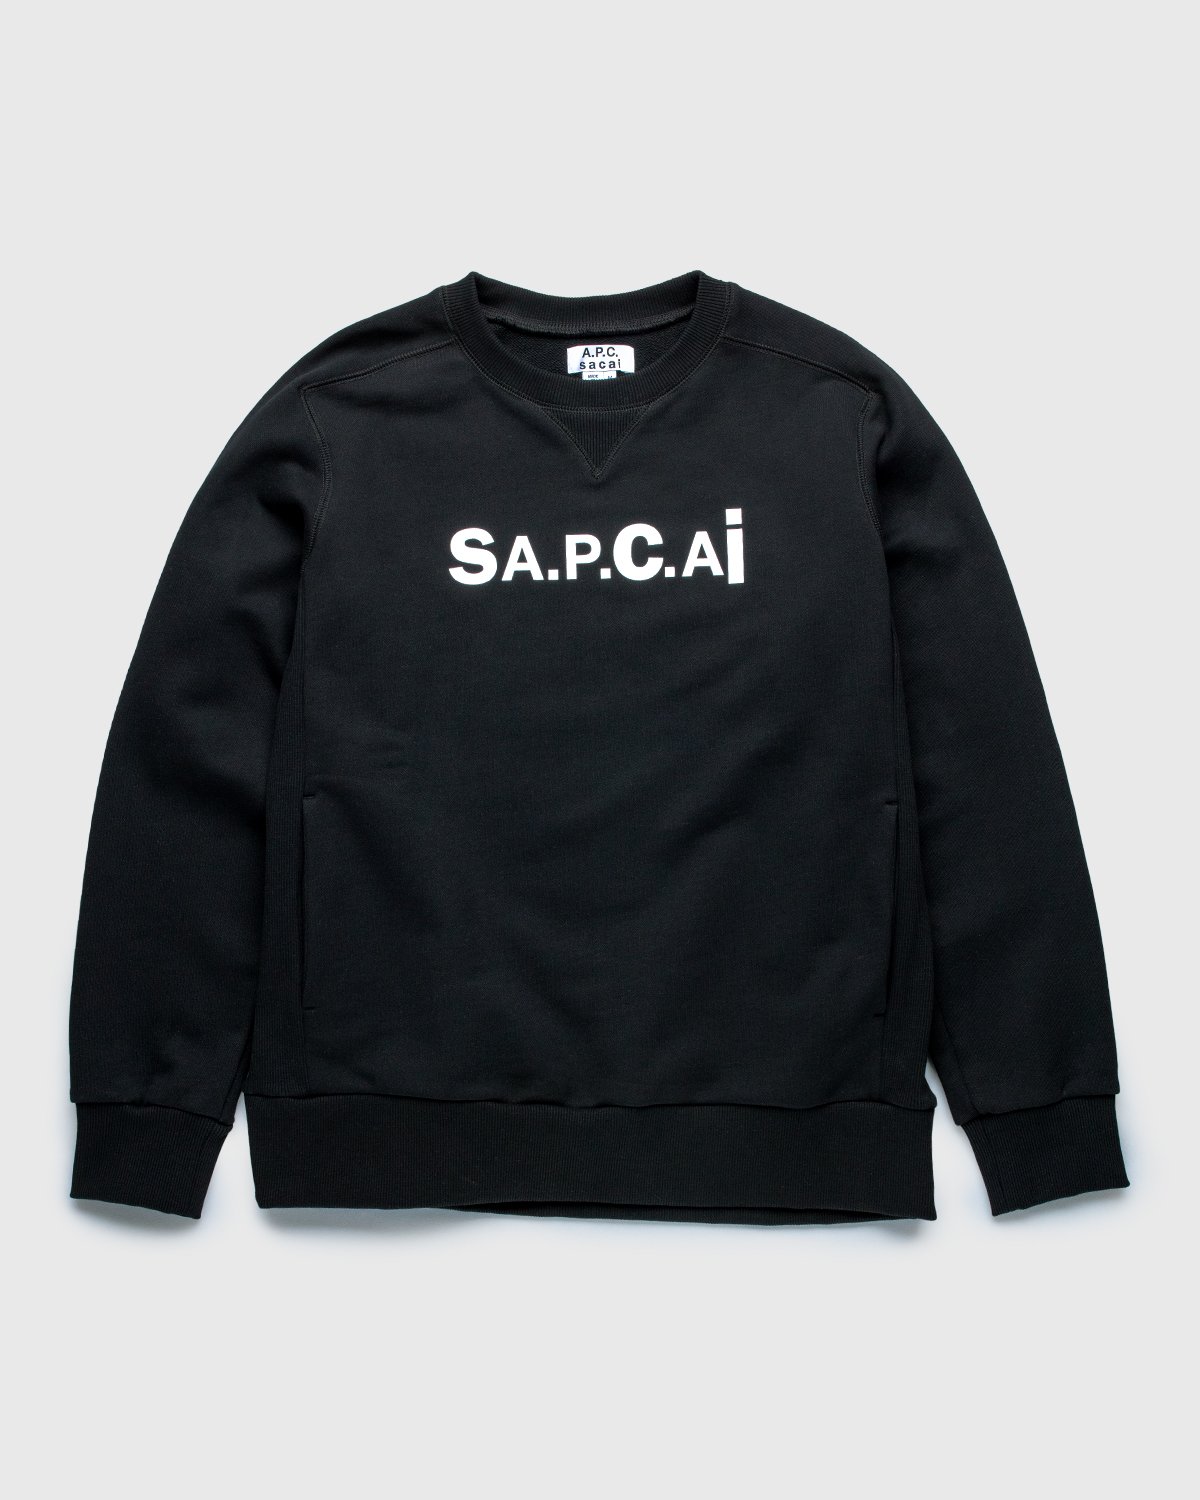 A.P.C. x Sacai - Tani Sweater Black - Clothing - Black - Image 1